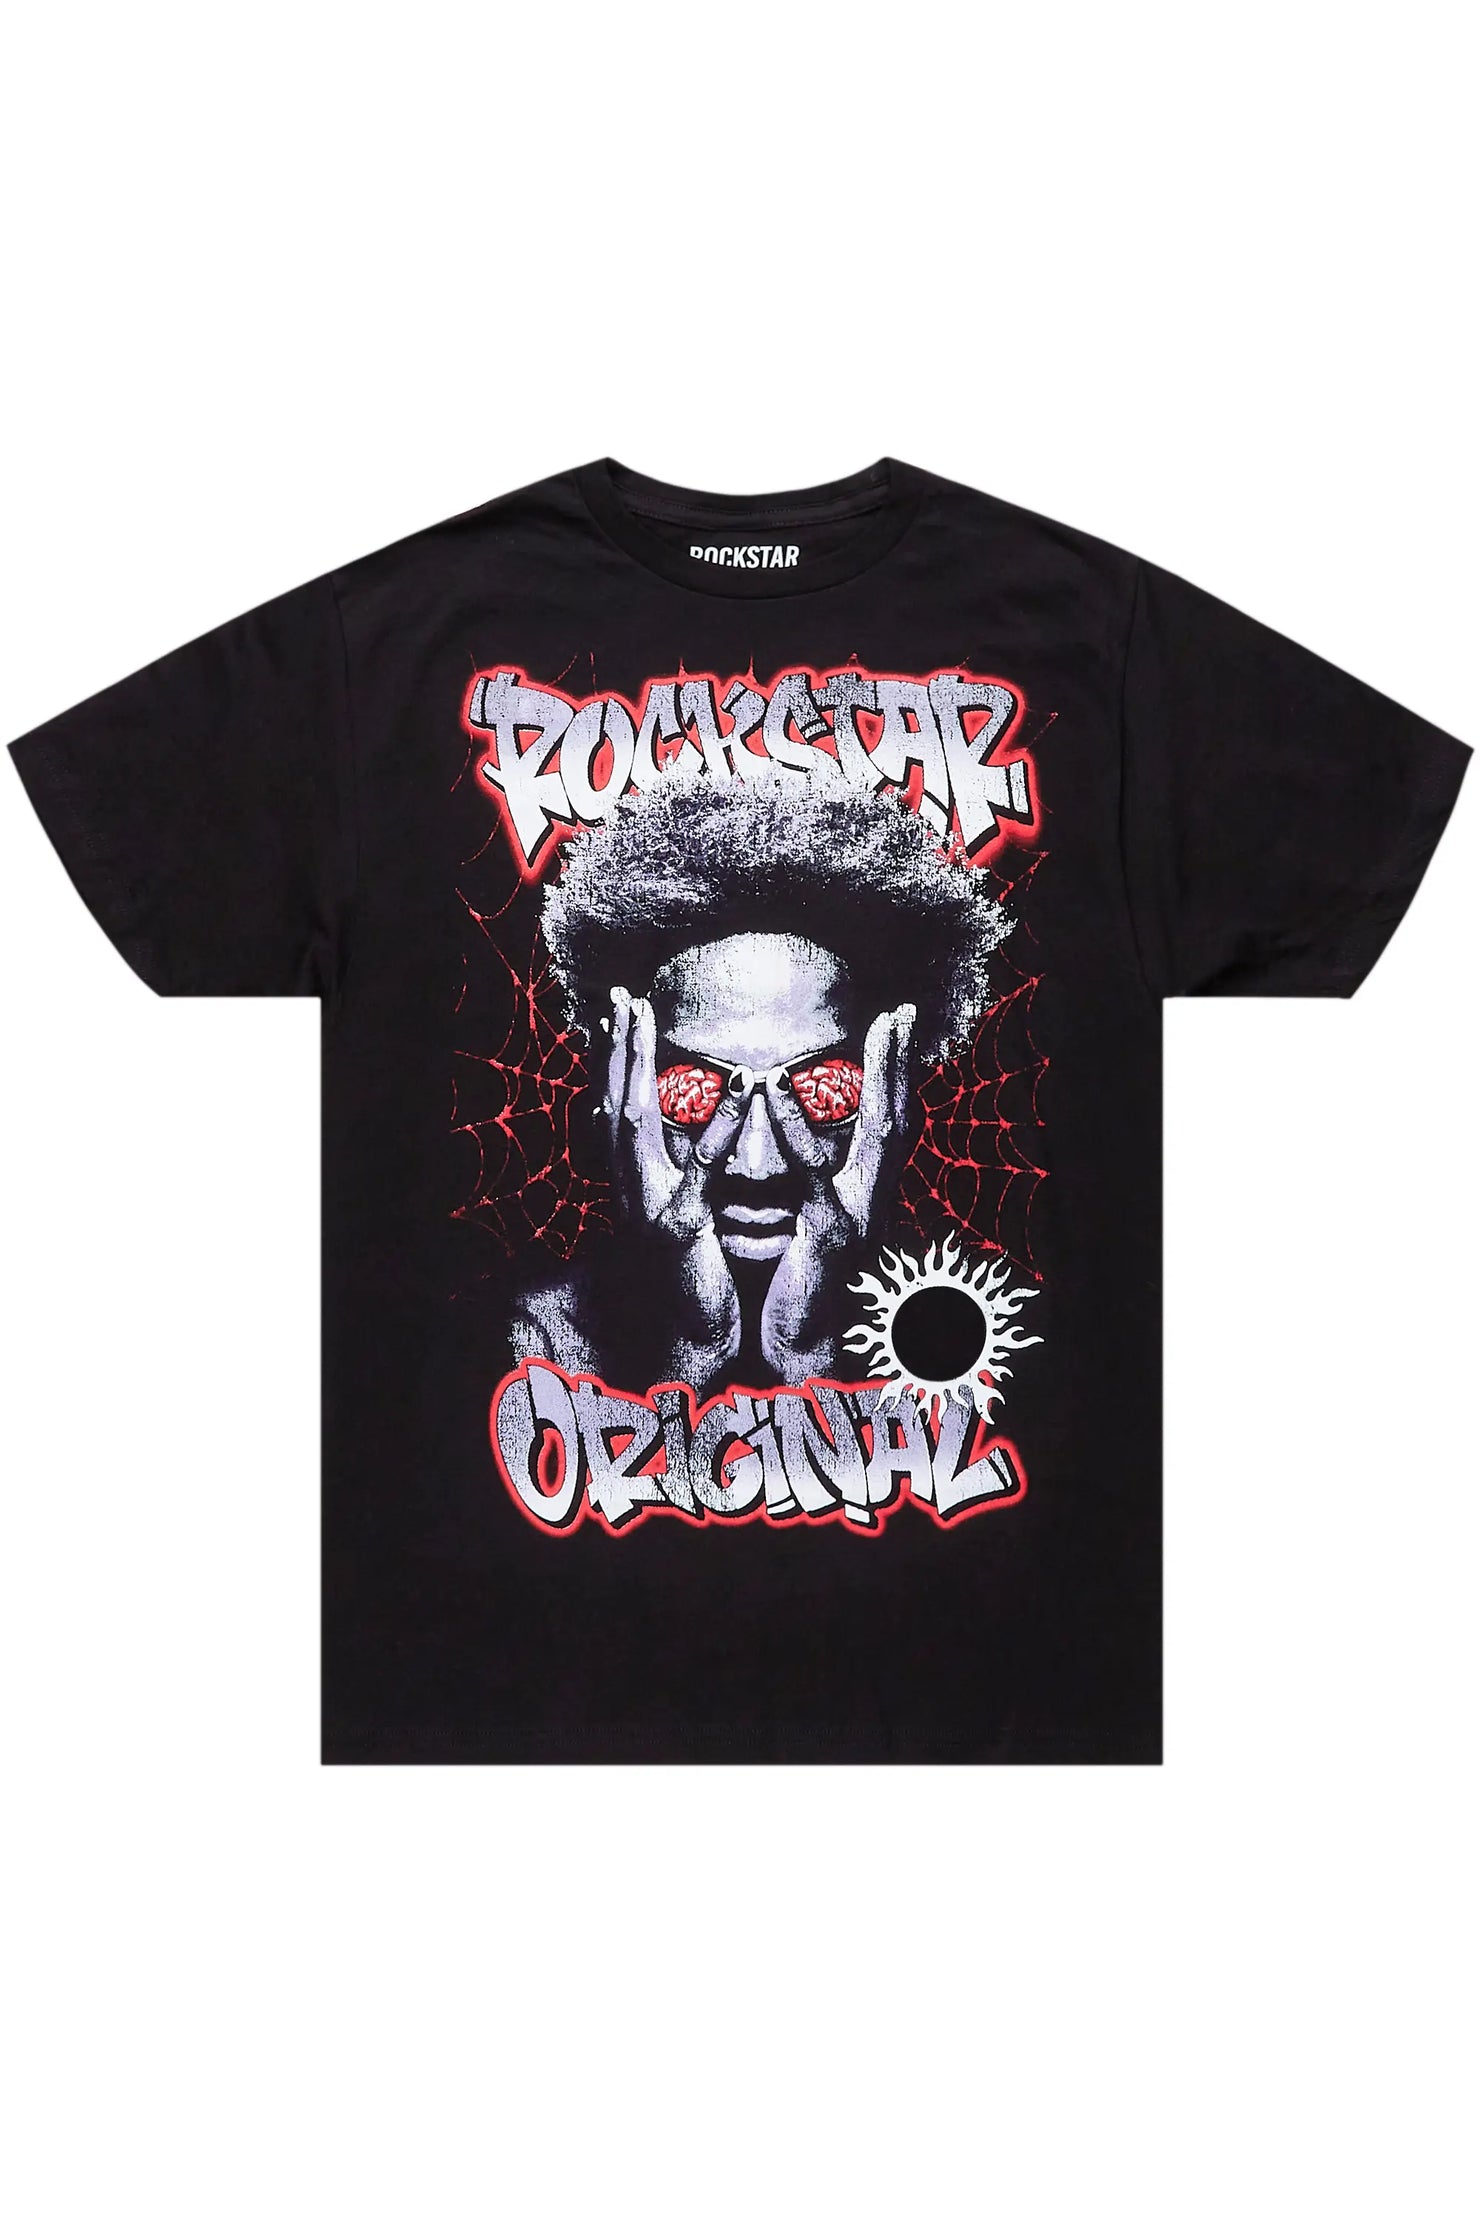 Acke Black Graphic T-Shirt